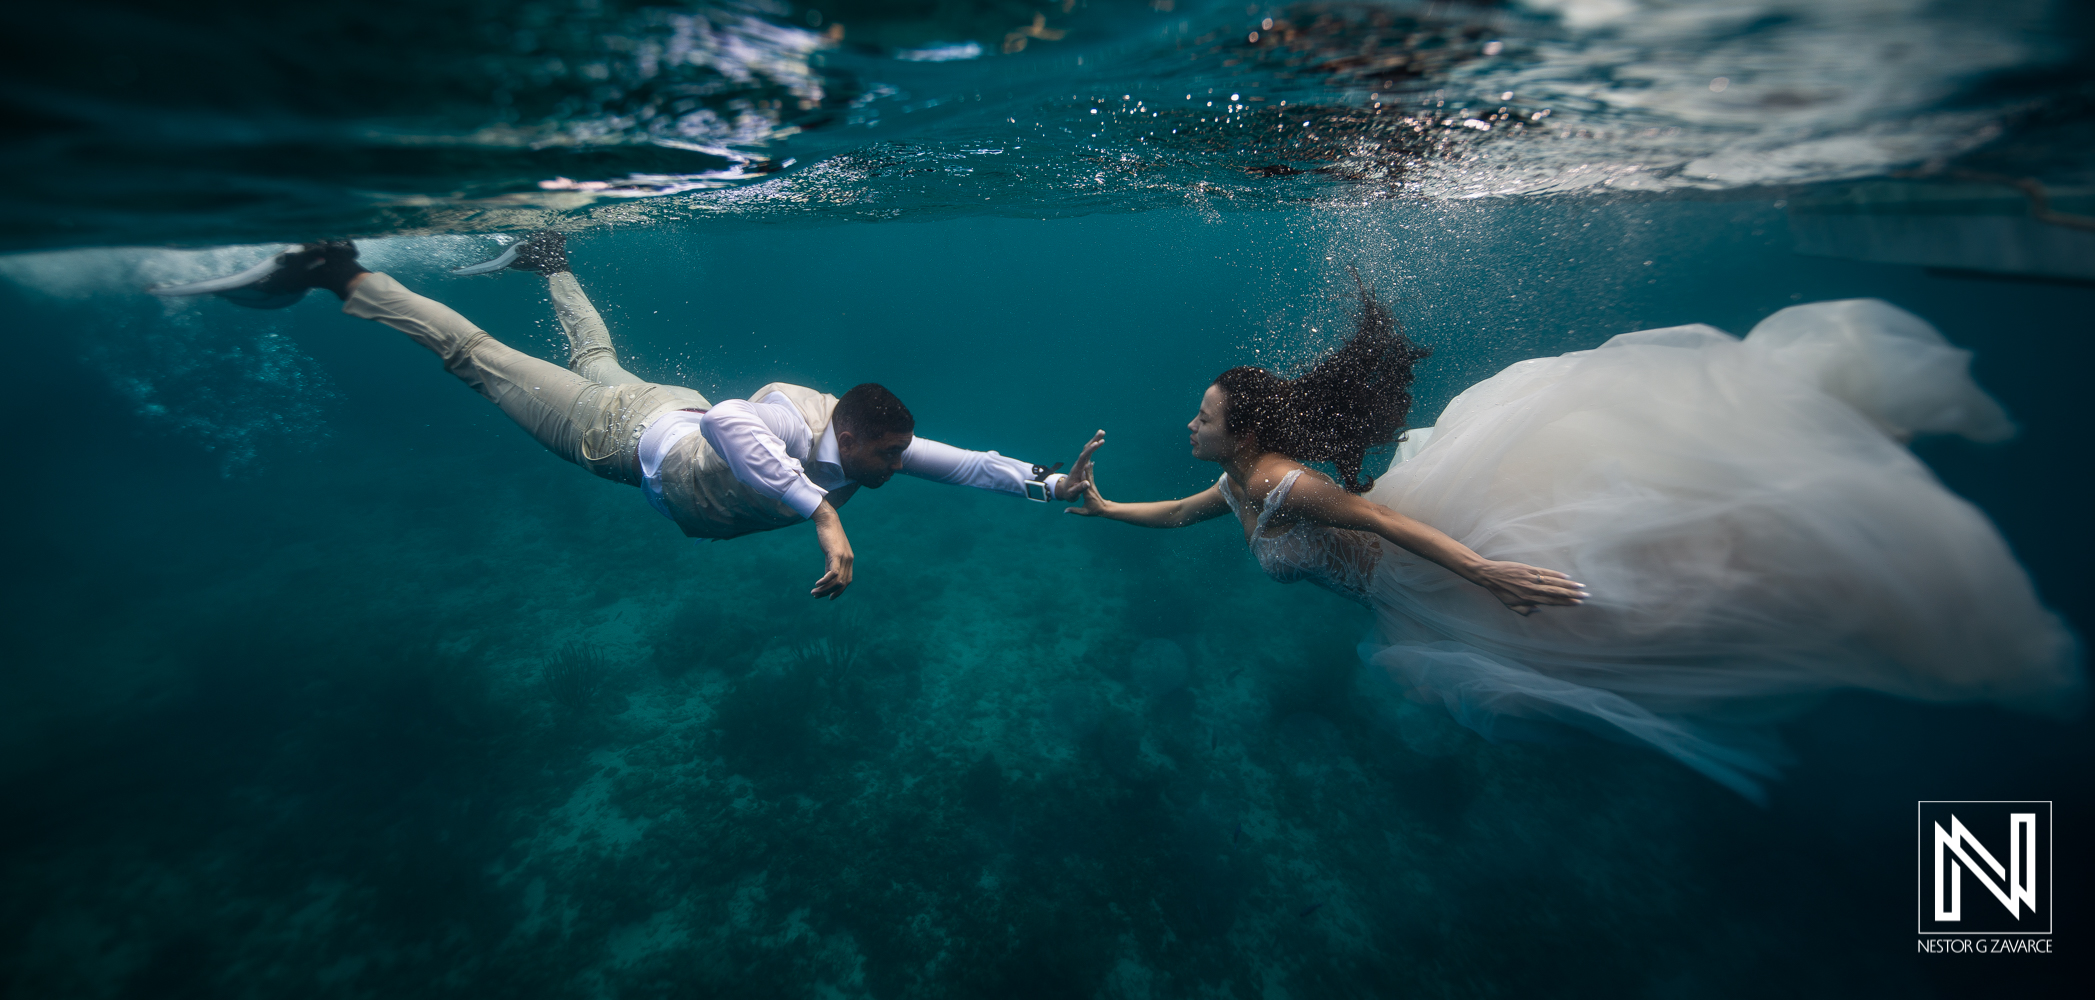 Wedding photographer Curacao